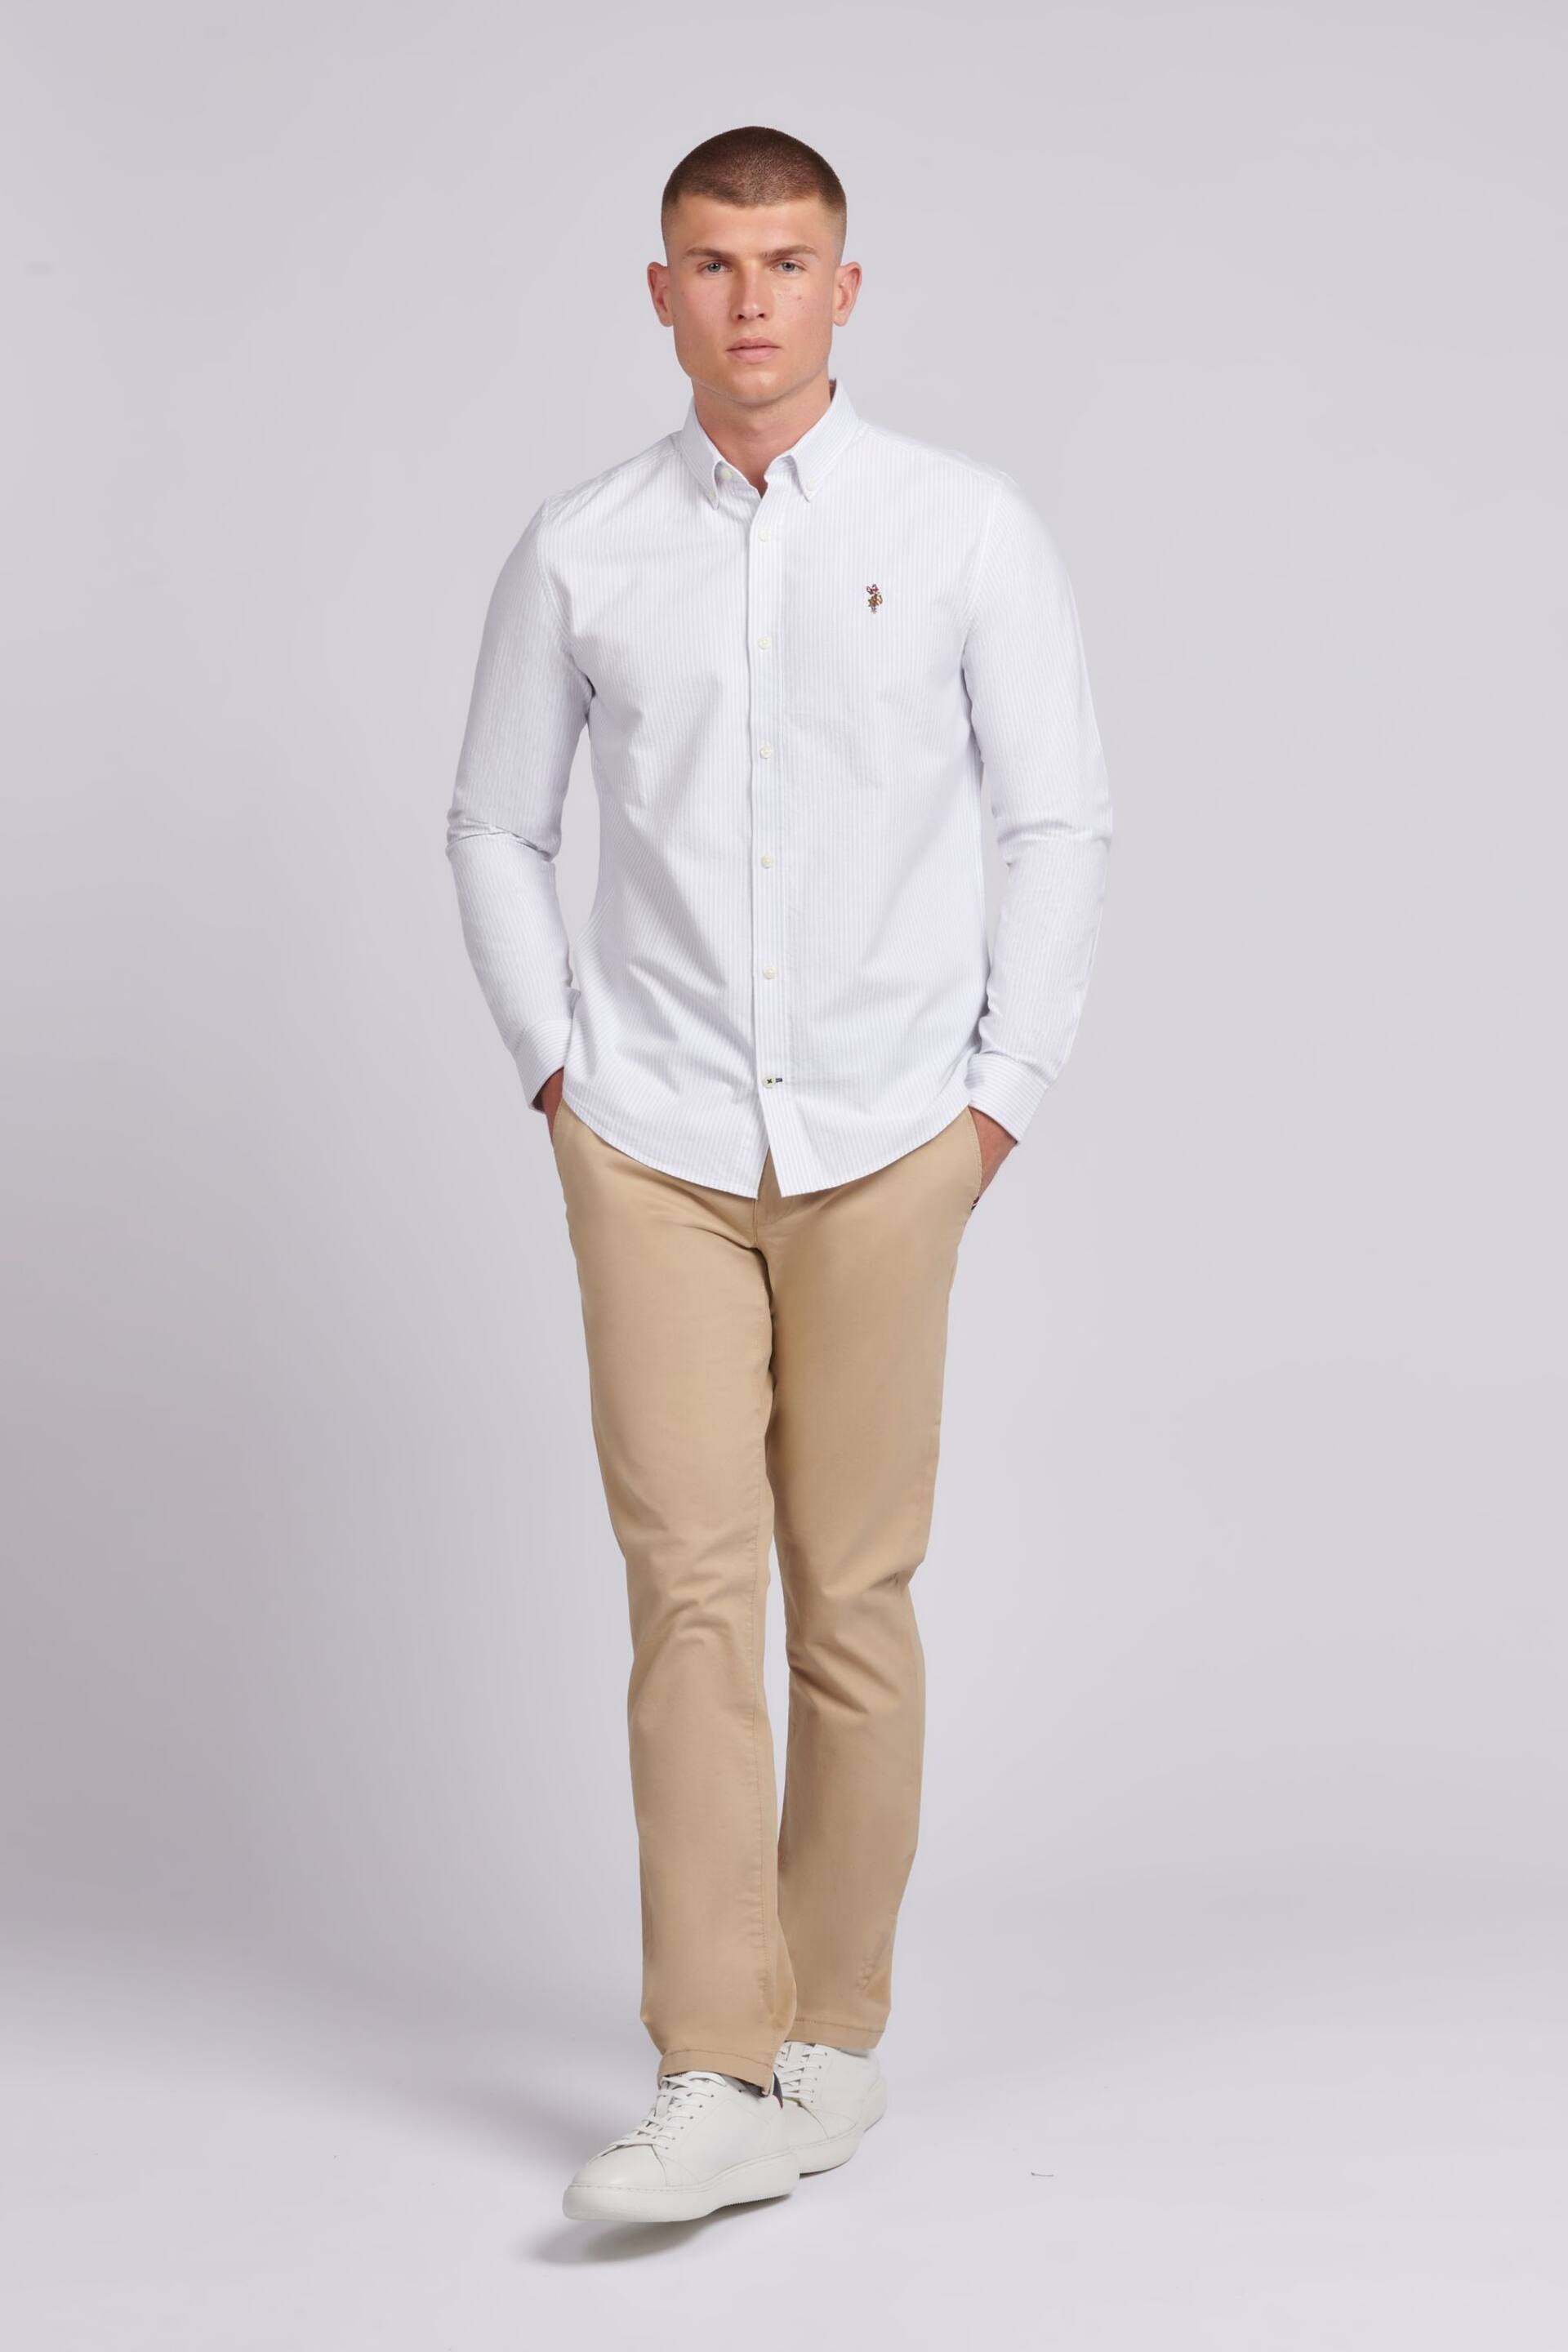 U.S. Polo Assn. Mens White Oxford Stripe Shirt - Image 3 of 6